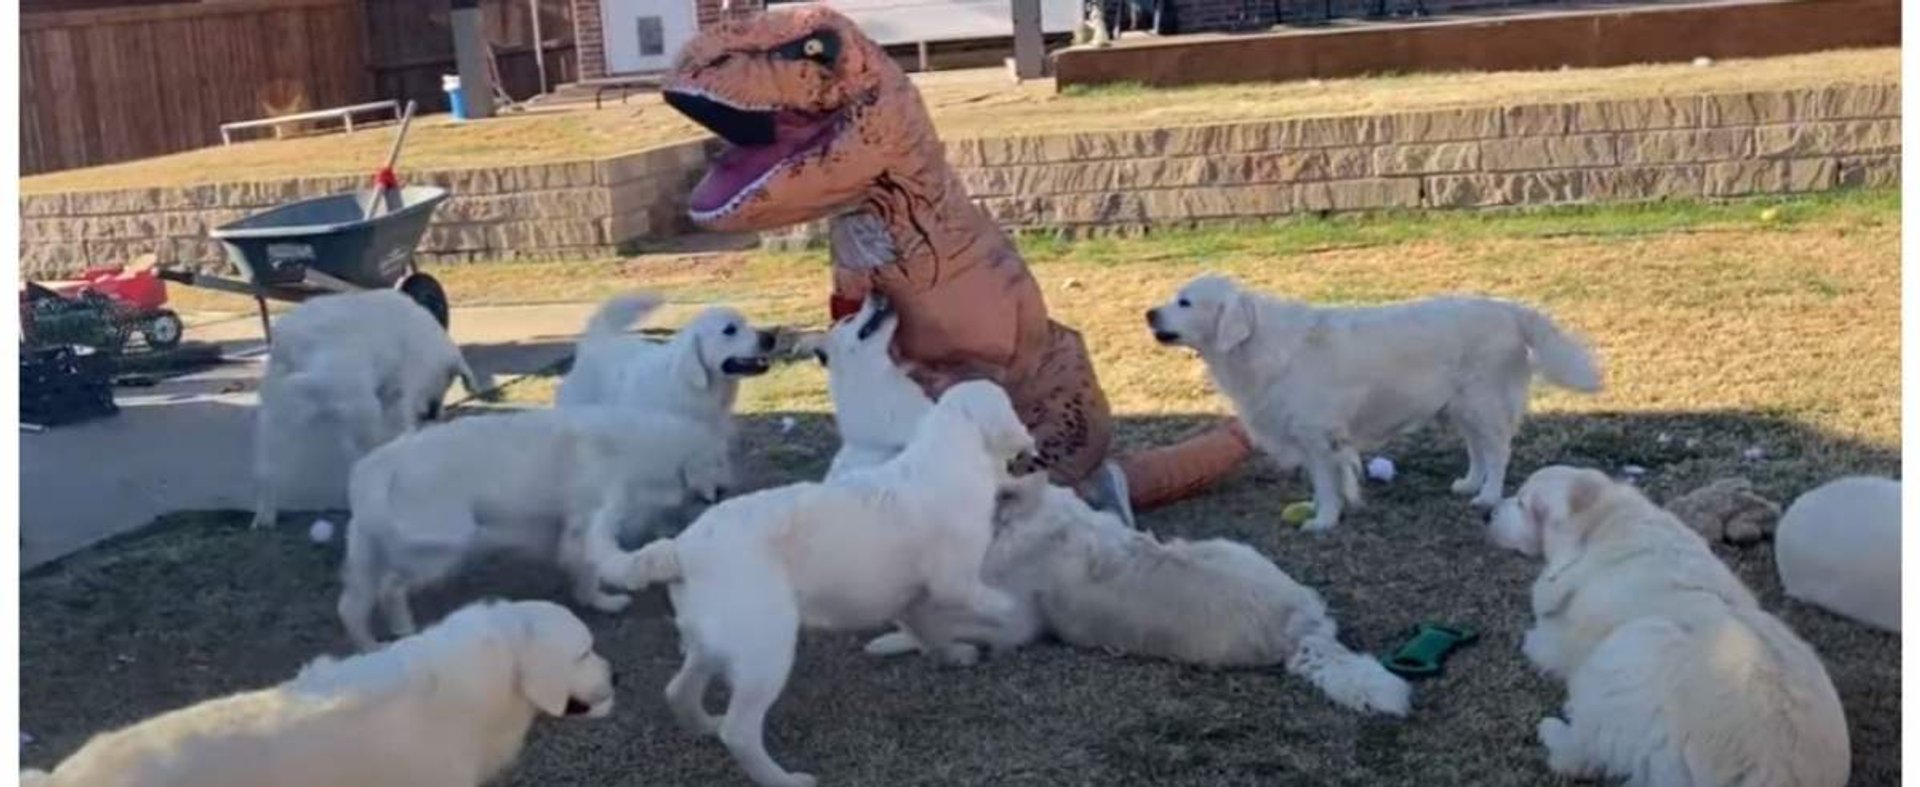 Dinozaur i stado psów